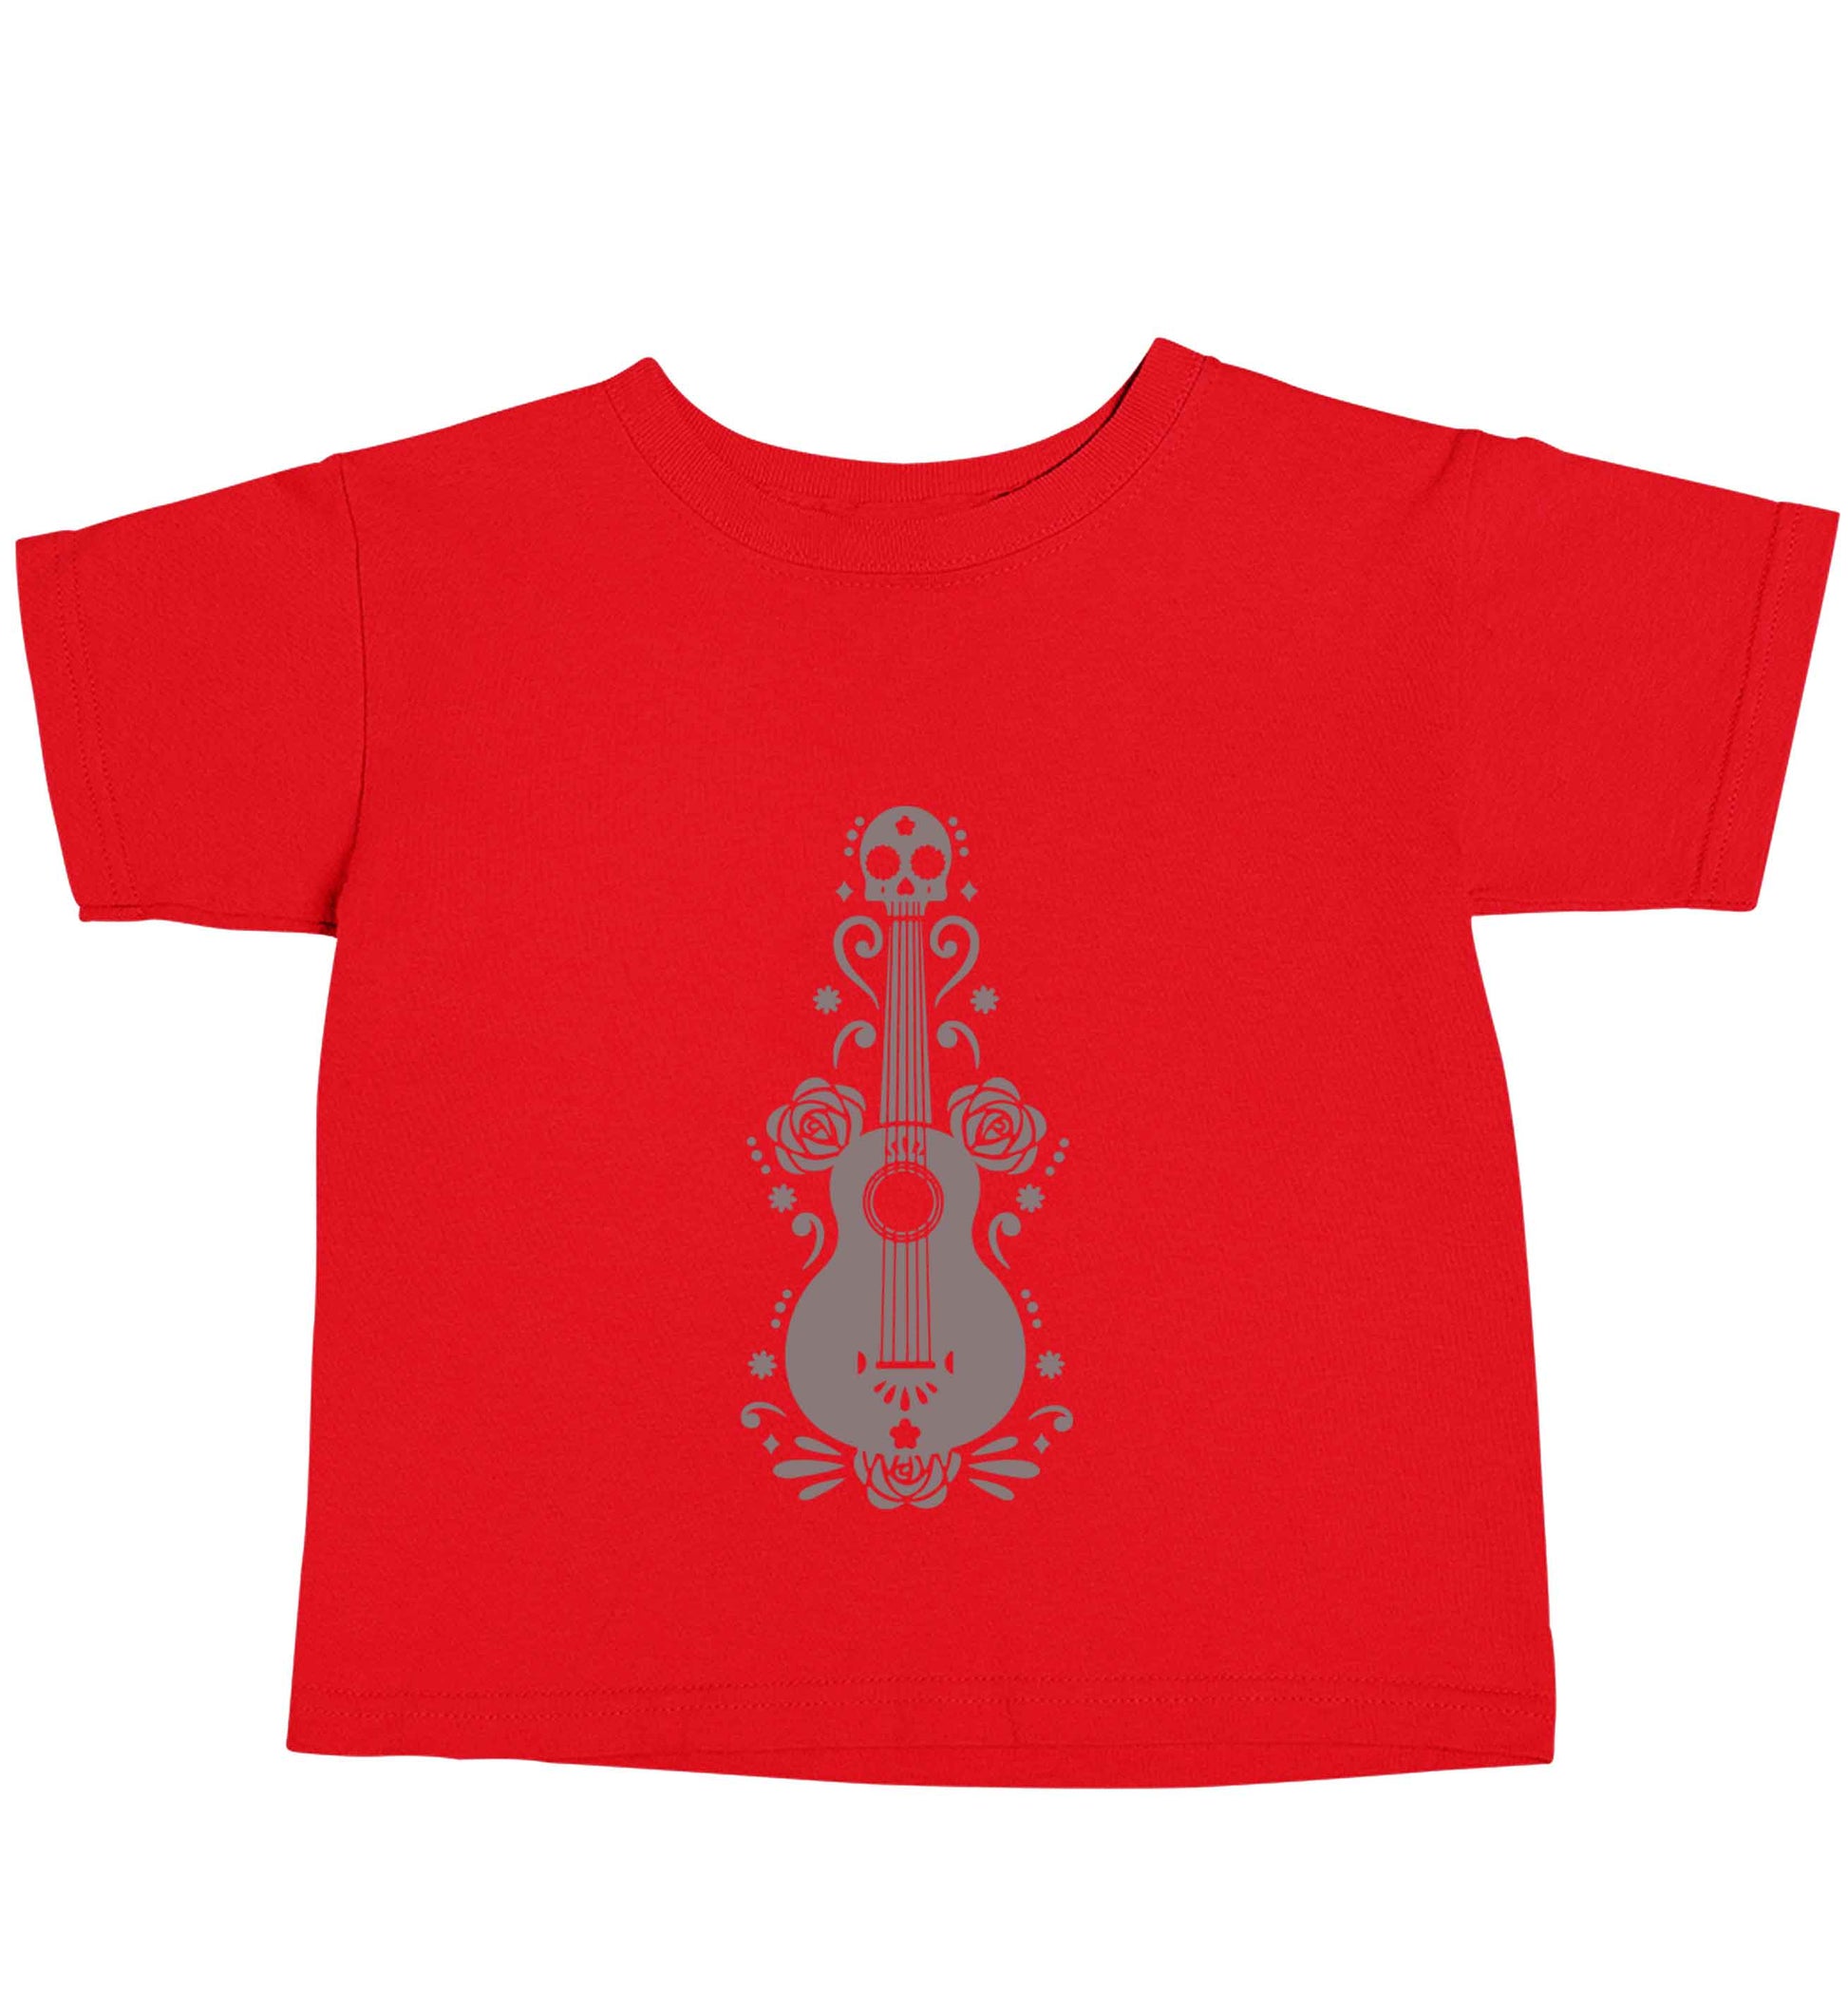 Guitar skull illustration red baby toddler Tshirt 2 Years